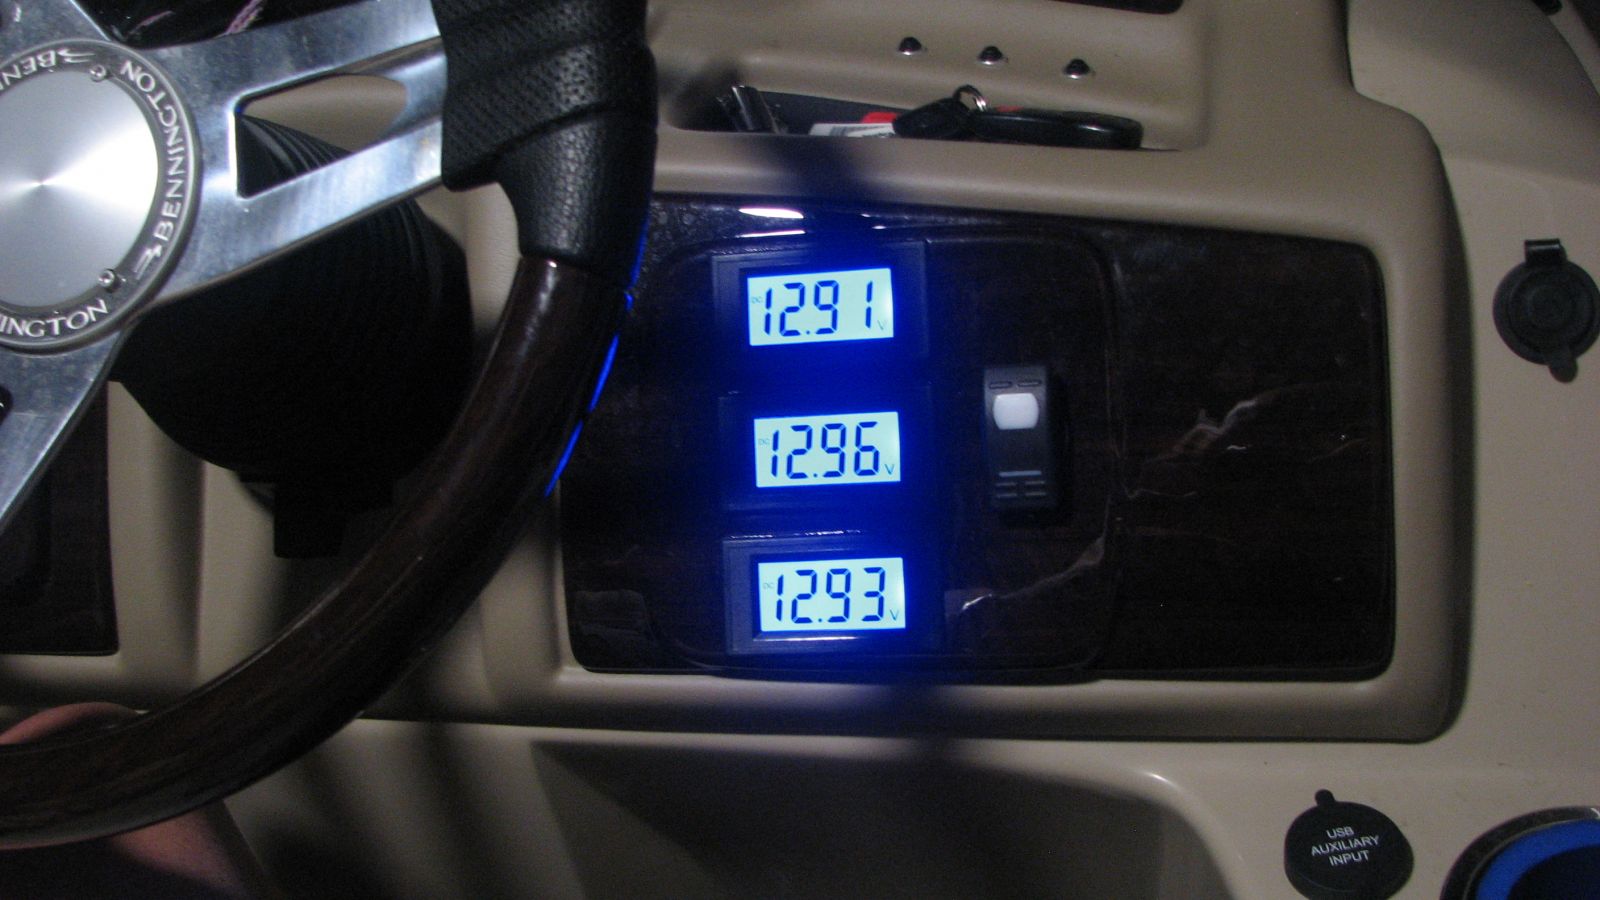 Battery meter detail